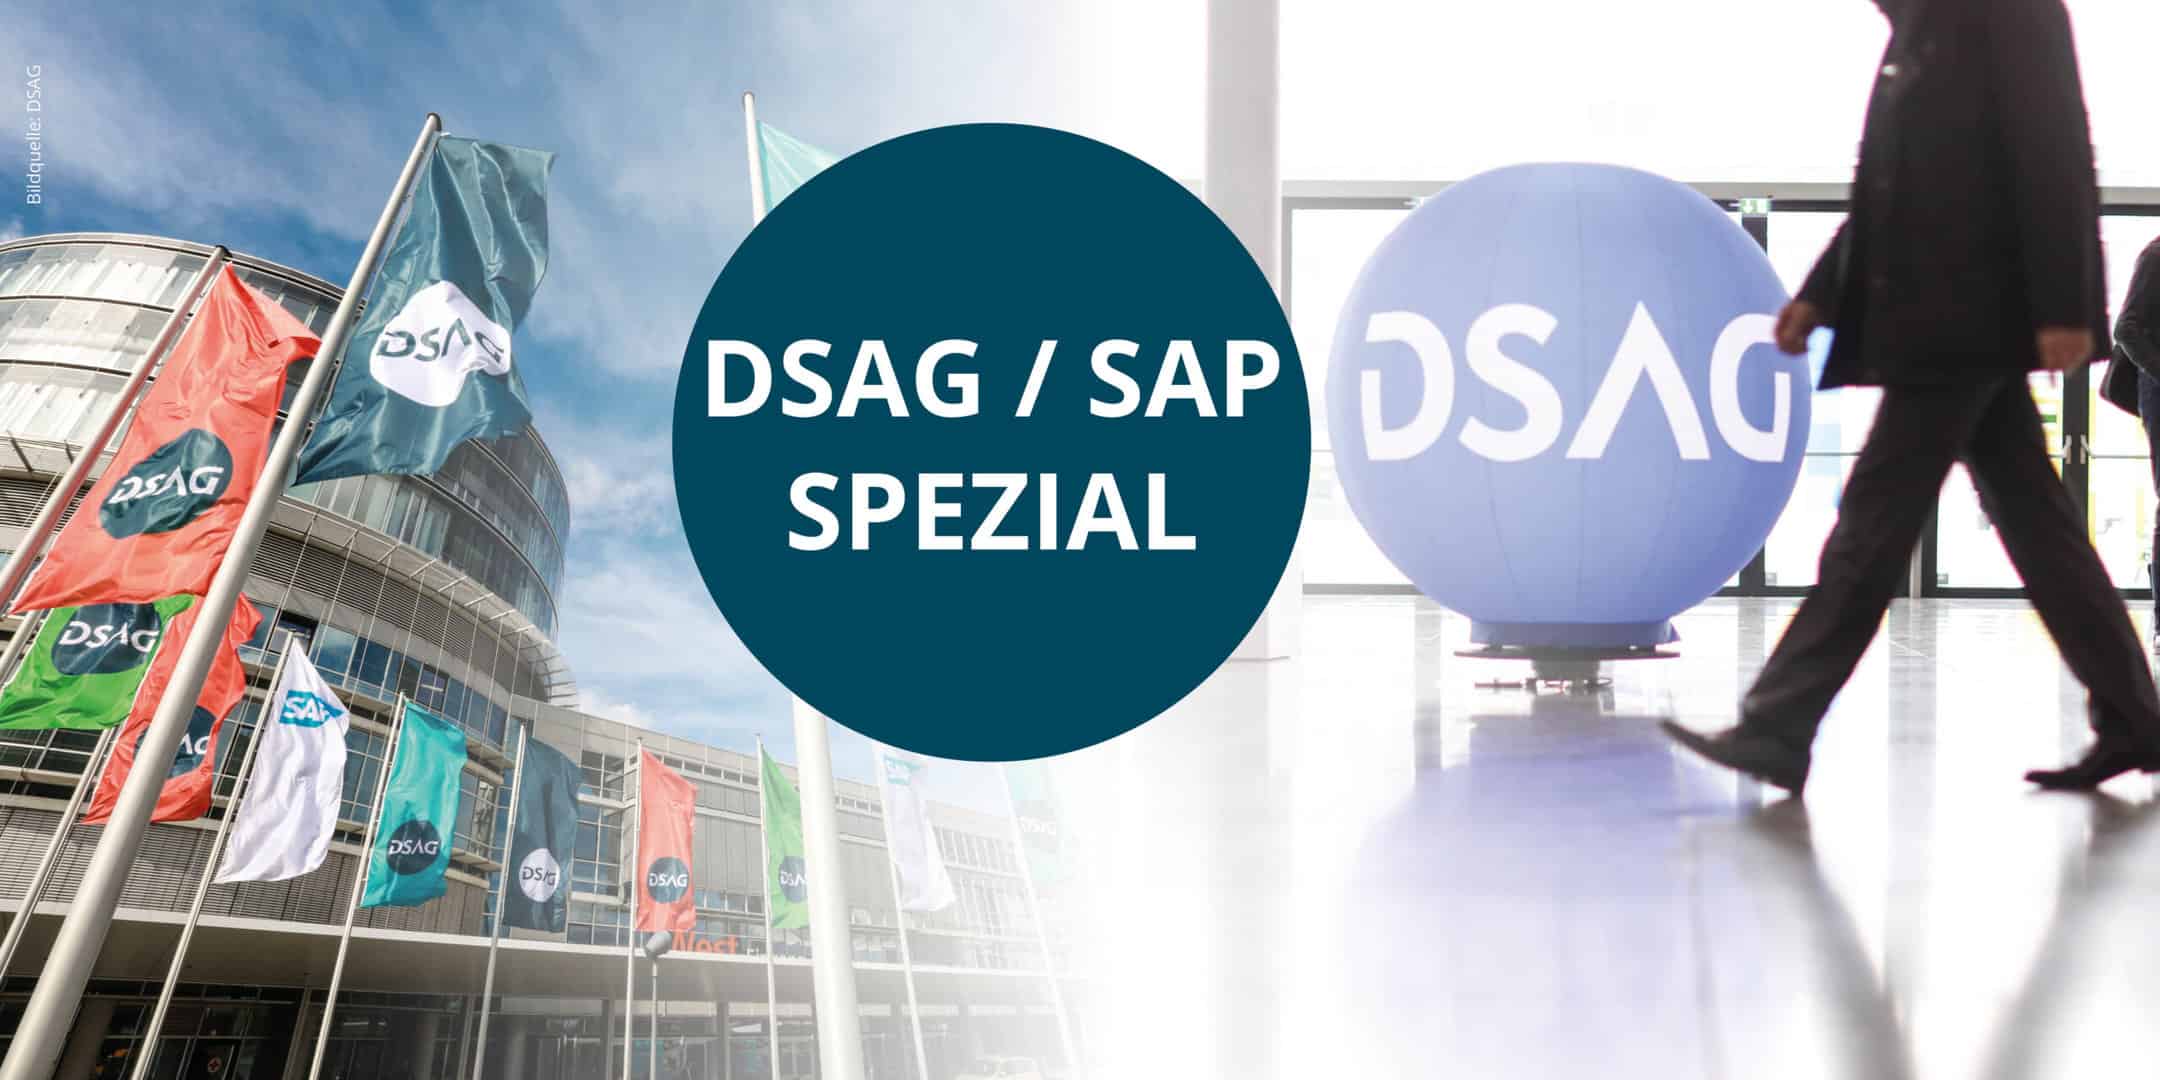 DSAG SAP Spezial scaled